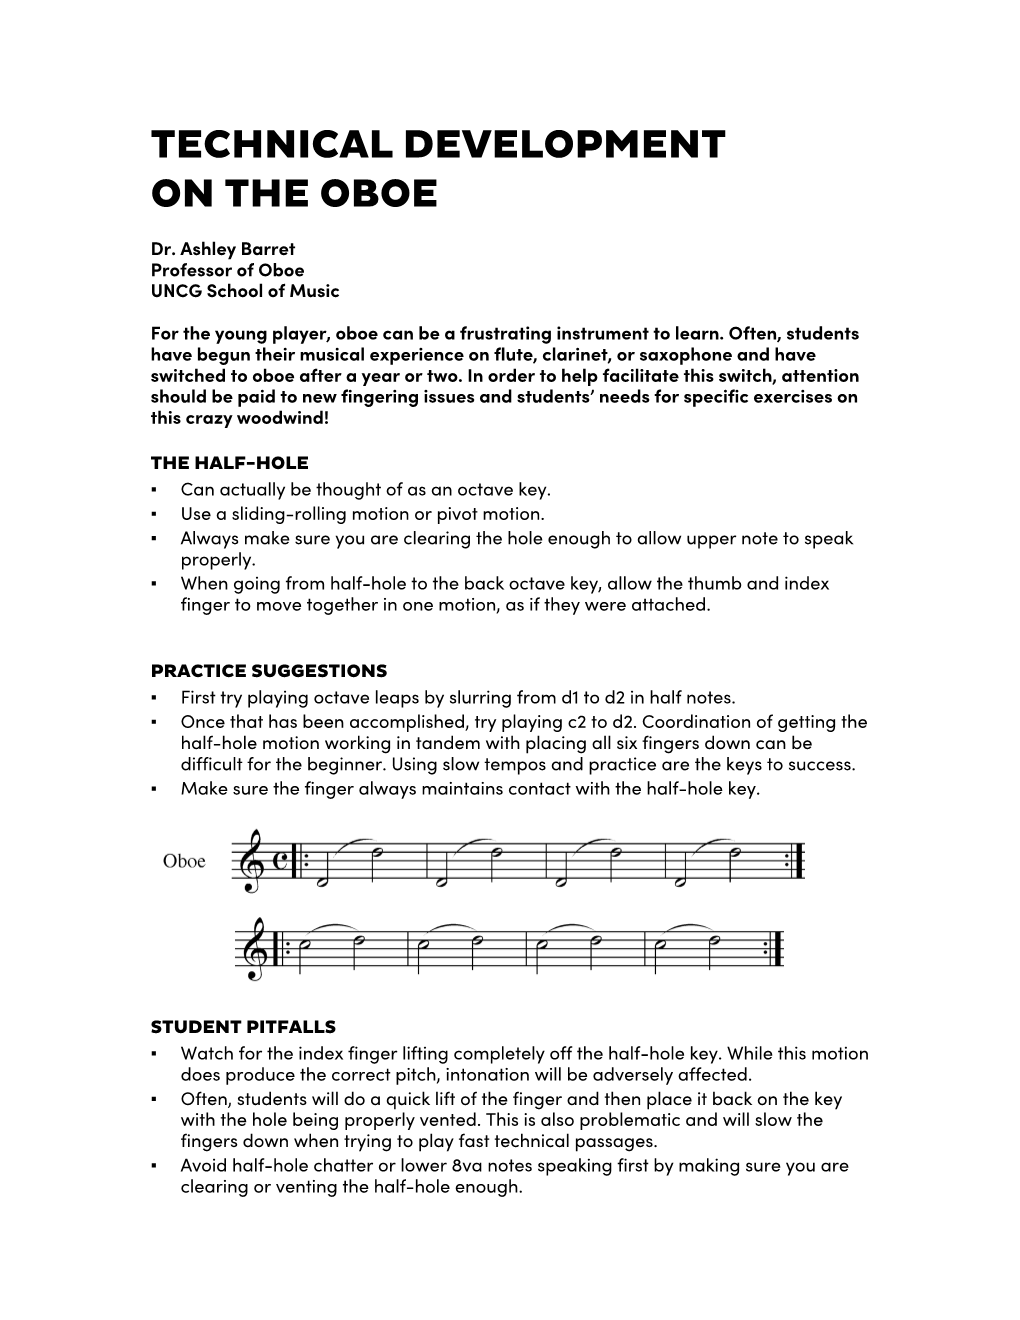 Technical Development on the Oboe